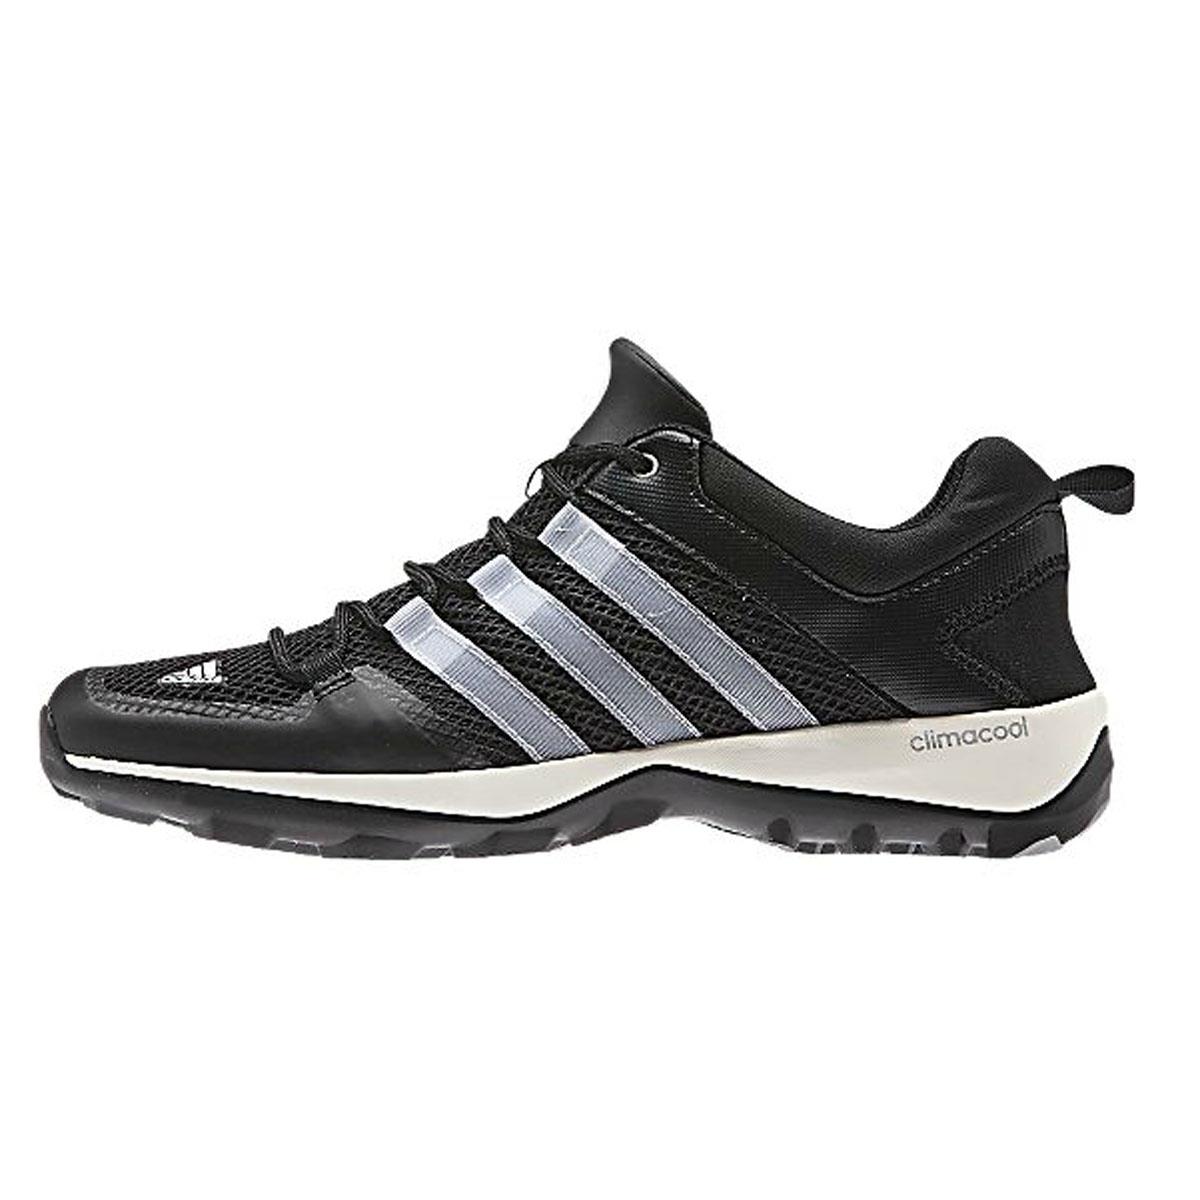 Adidas Outdoor 2015 Men's Cilmacool Daroga Plus Hiking Shoe   B40915 (Black/Chalk White/Silver Metallic   11.5)